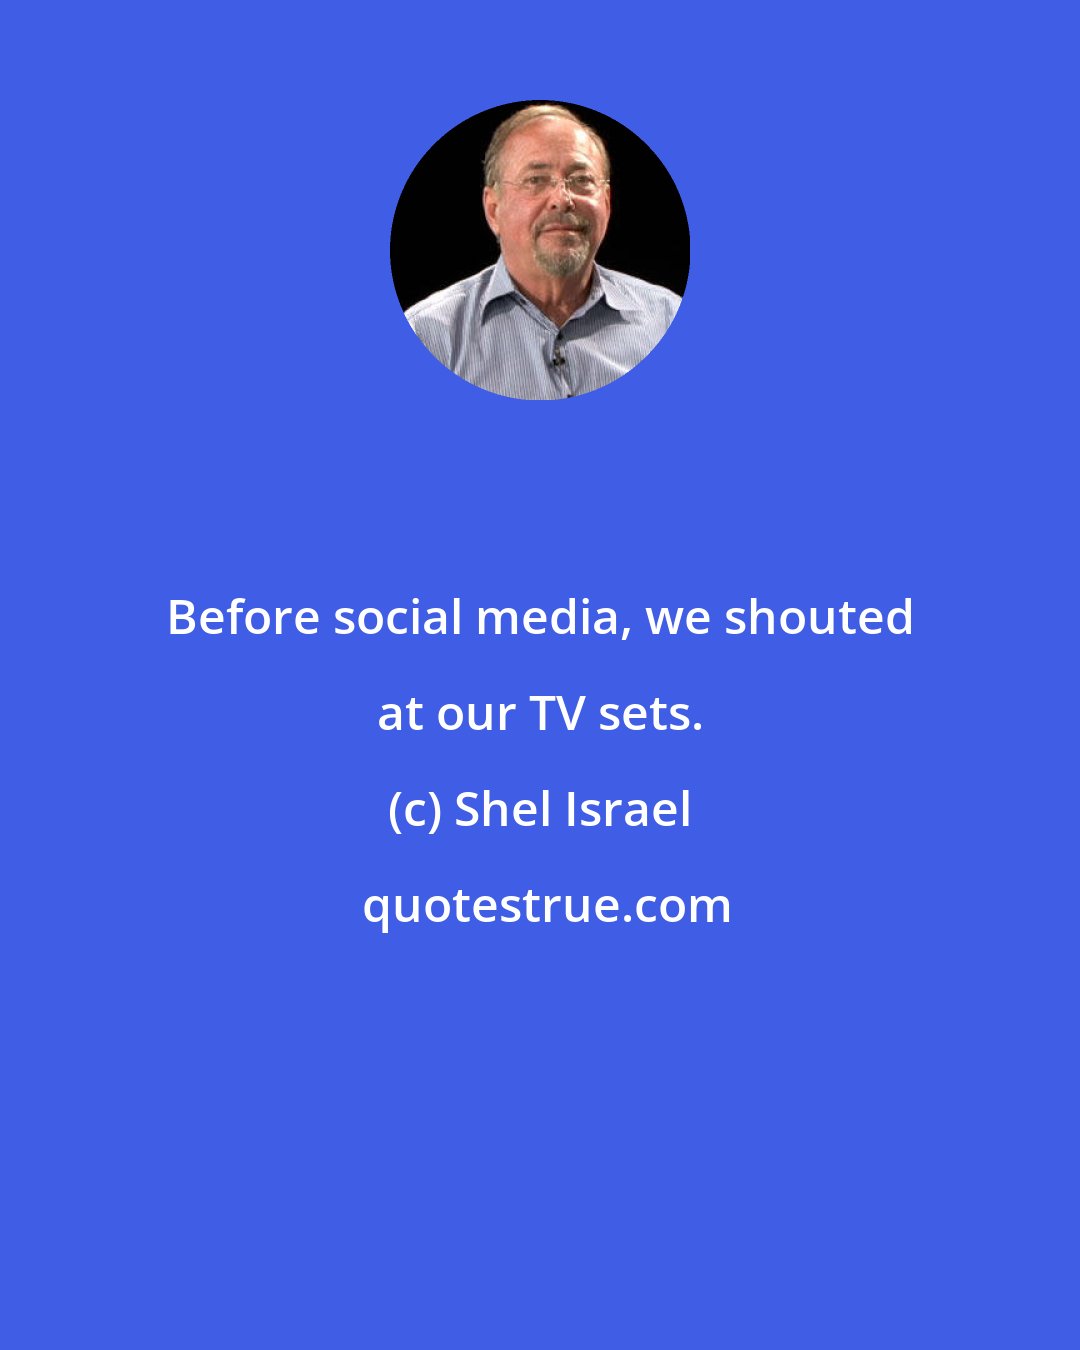 Shel Israel: Before social media, we shouted at our TV sets.